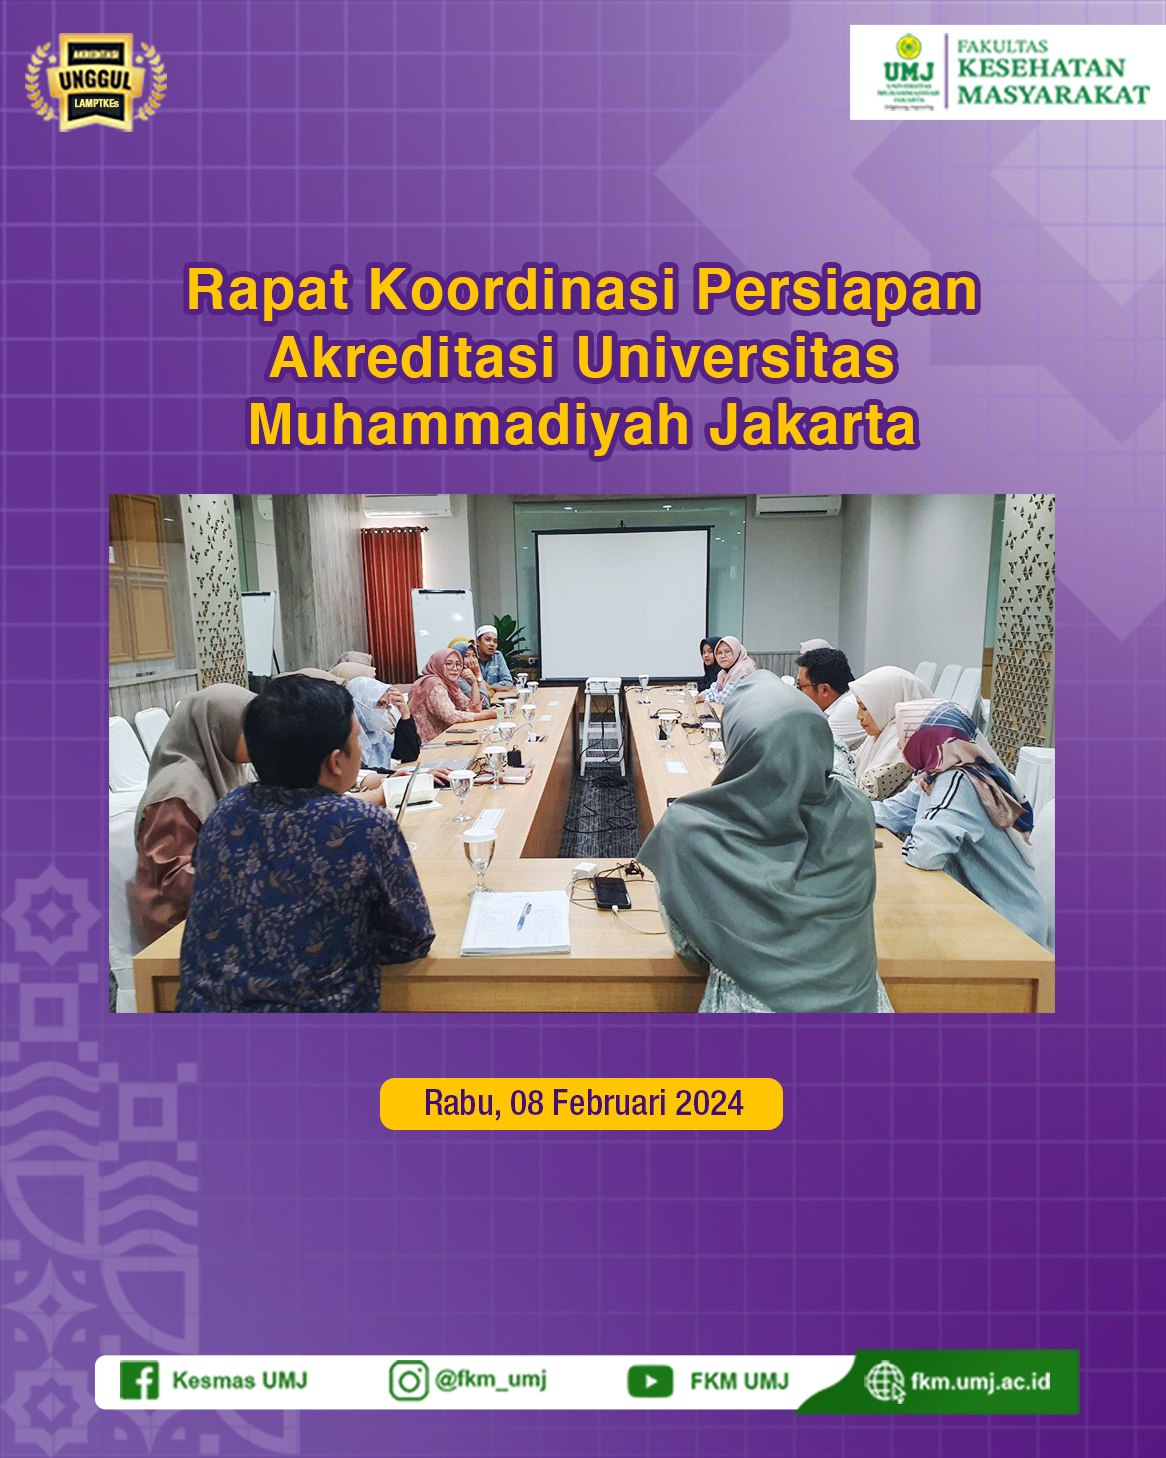 Rapat Koordinasi Persiapan Akreditasi Universitas Muhammadiyah Jakarta